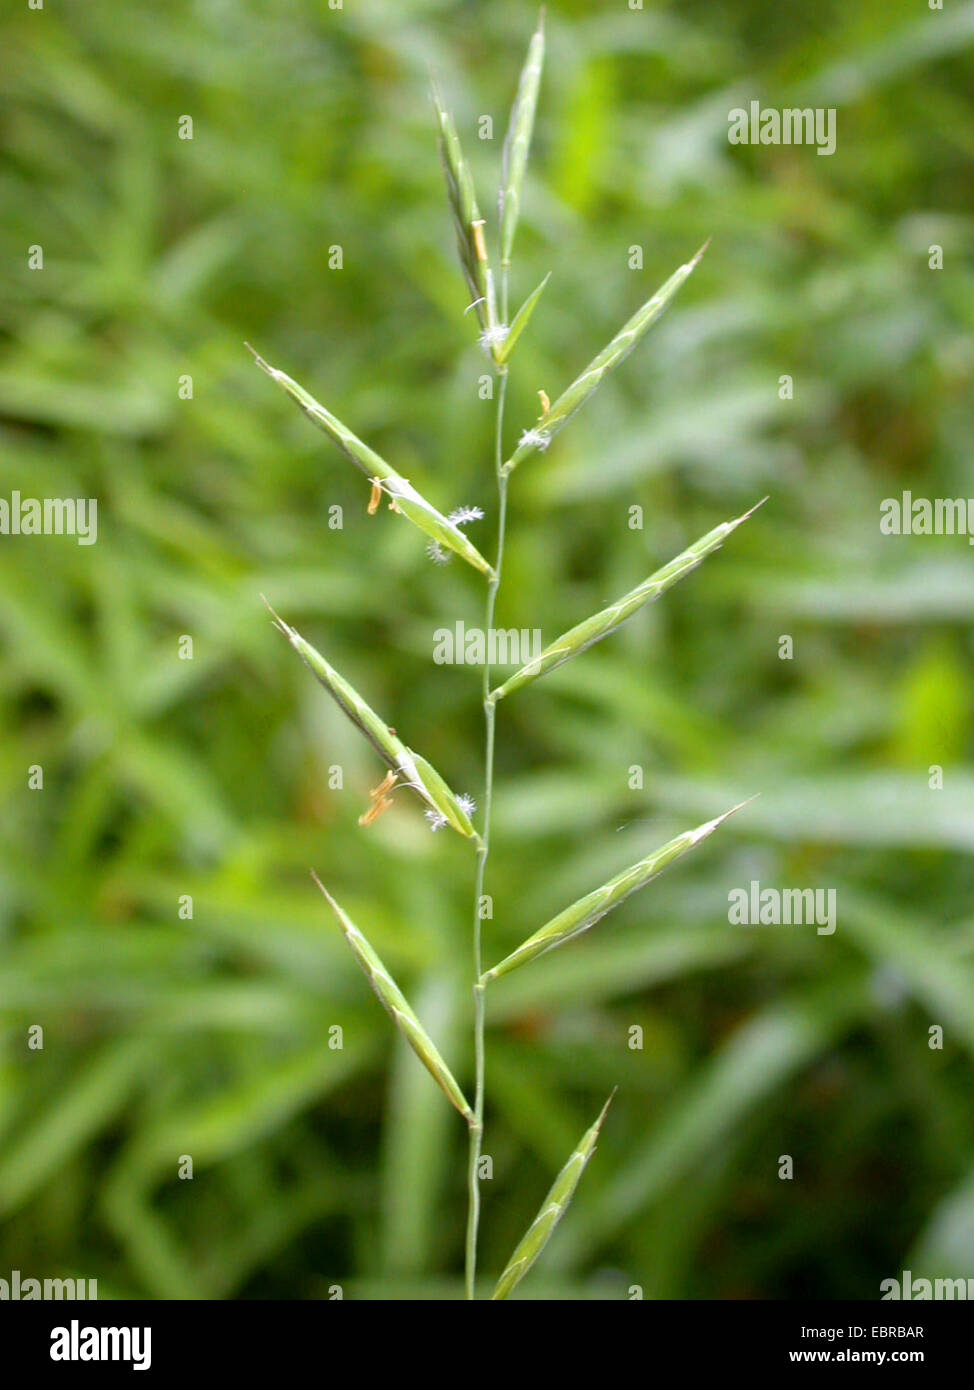 tor-grass (Brachypodium pinnatum), spike, Germany Stock Photo